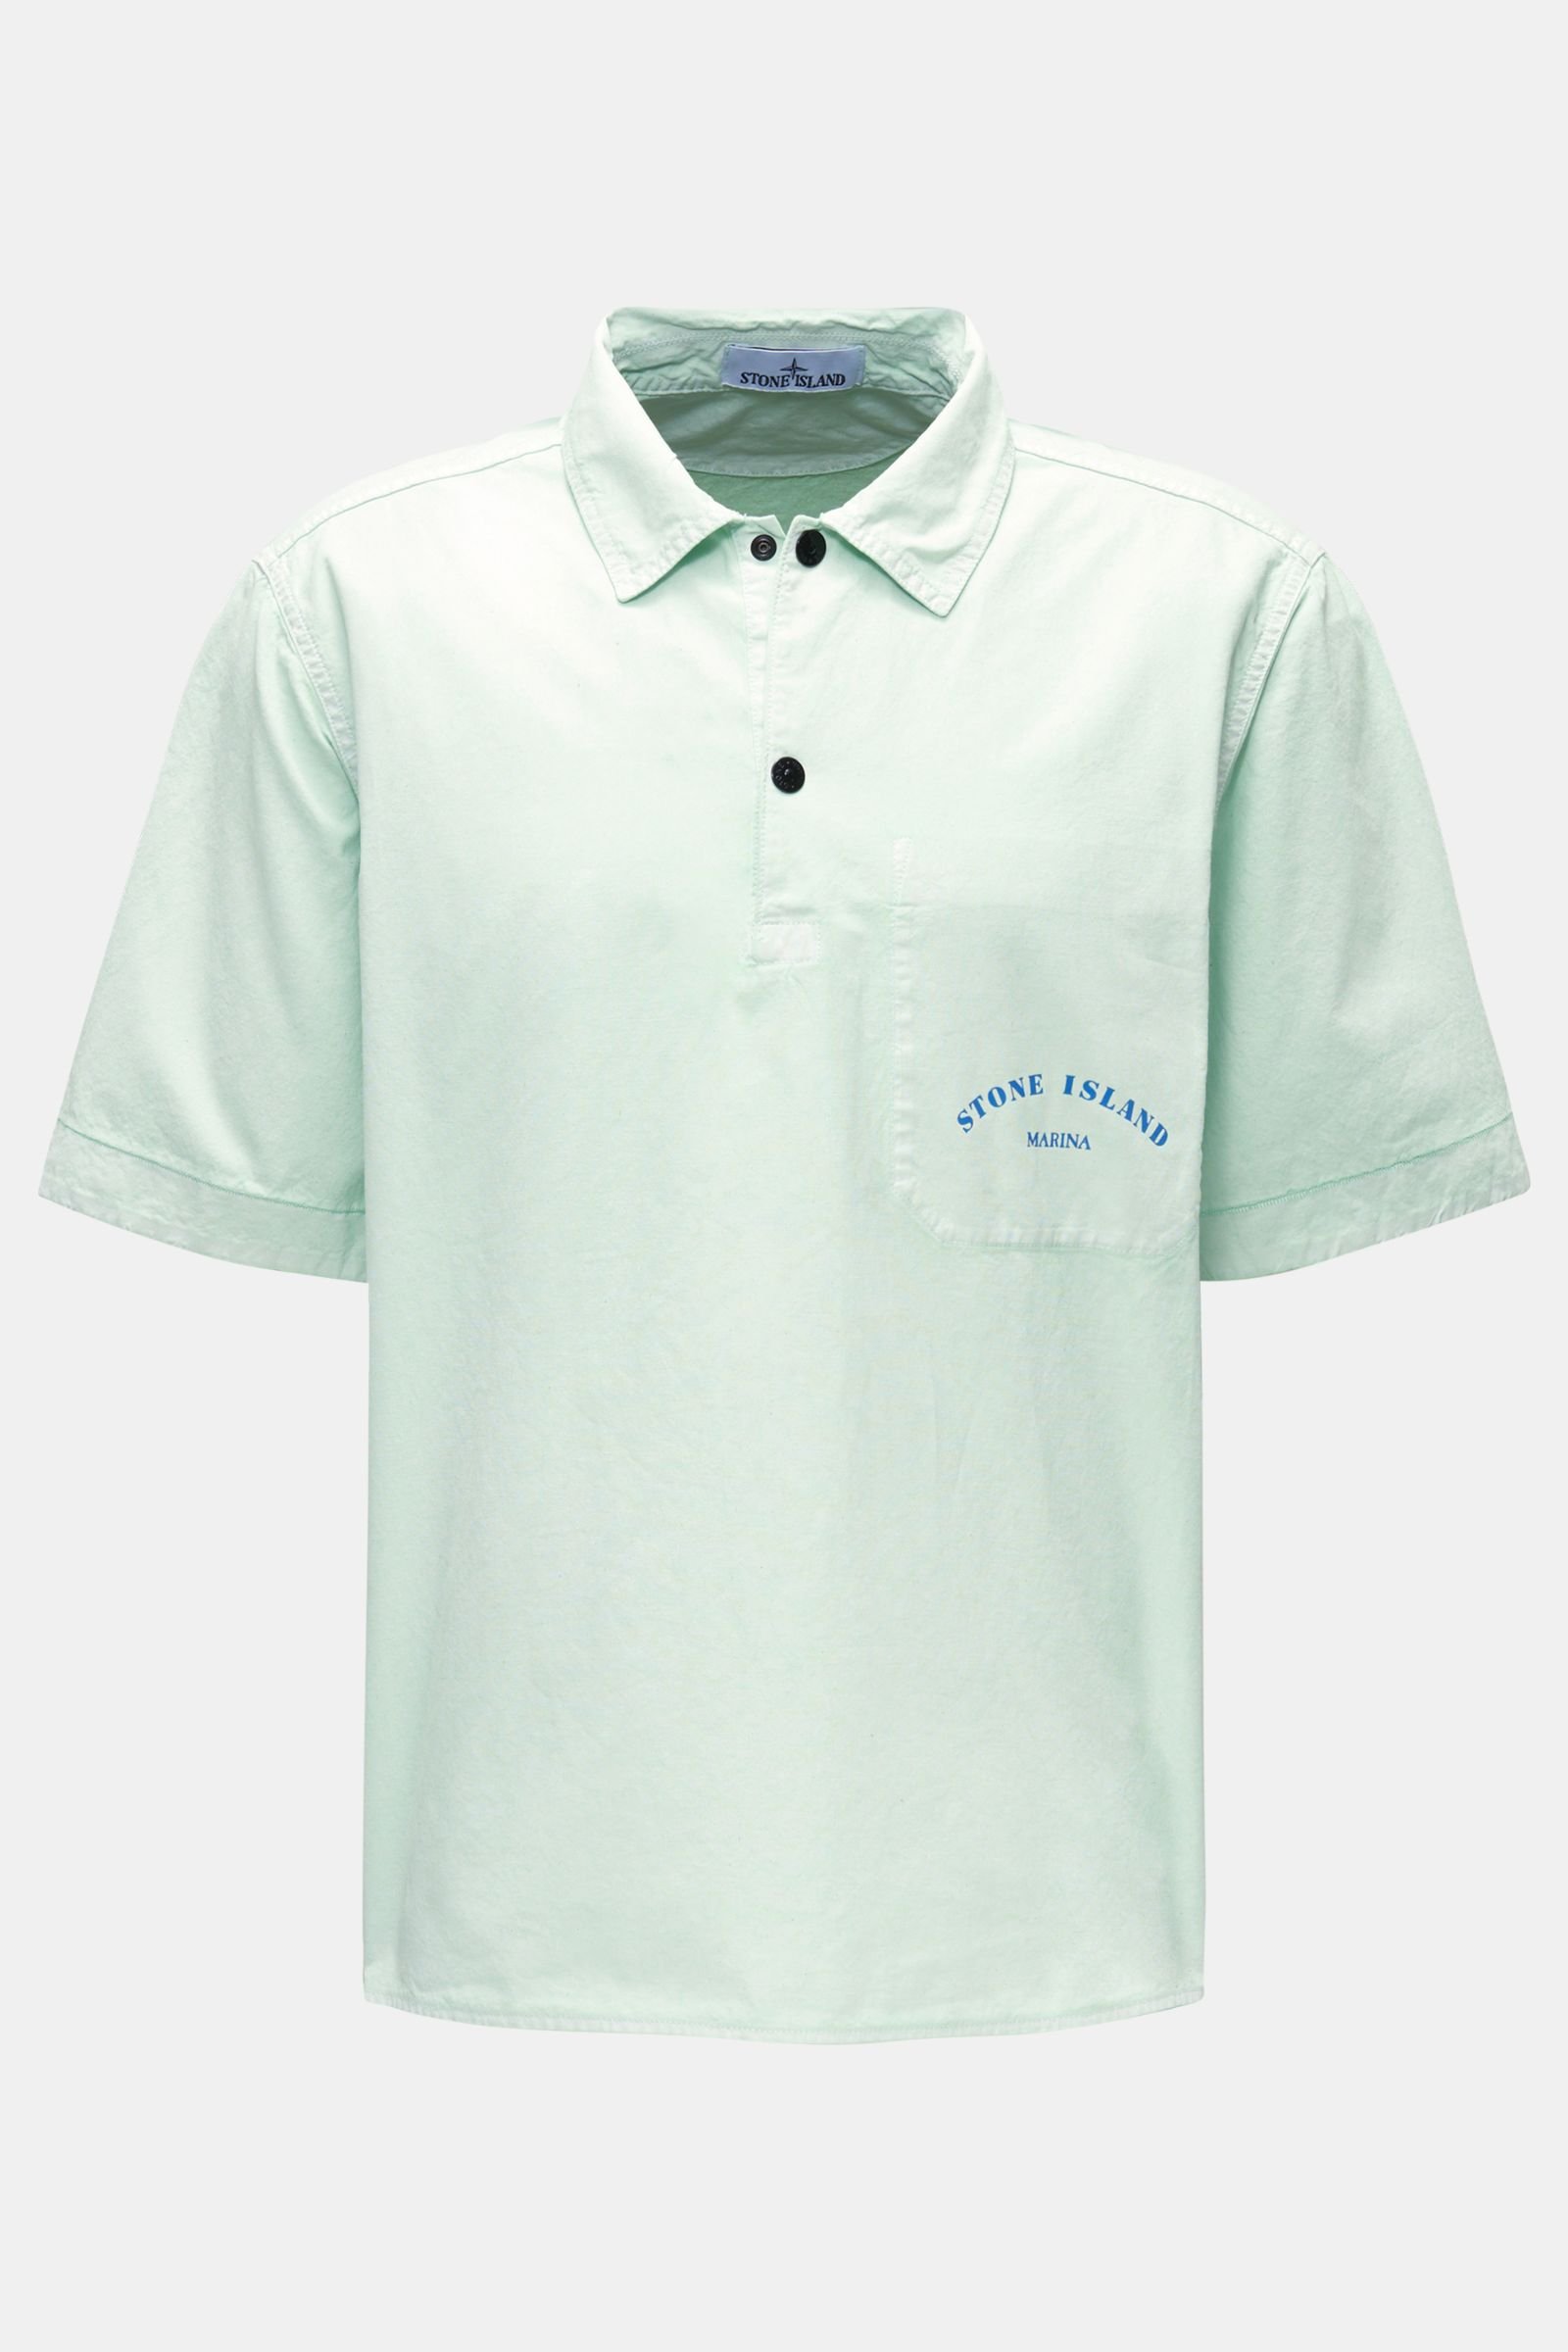 Popover short sleeve shirt 'Marina' Kent collar mint green